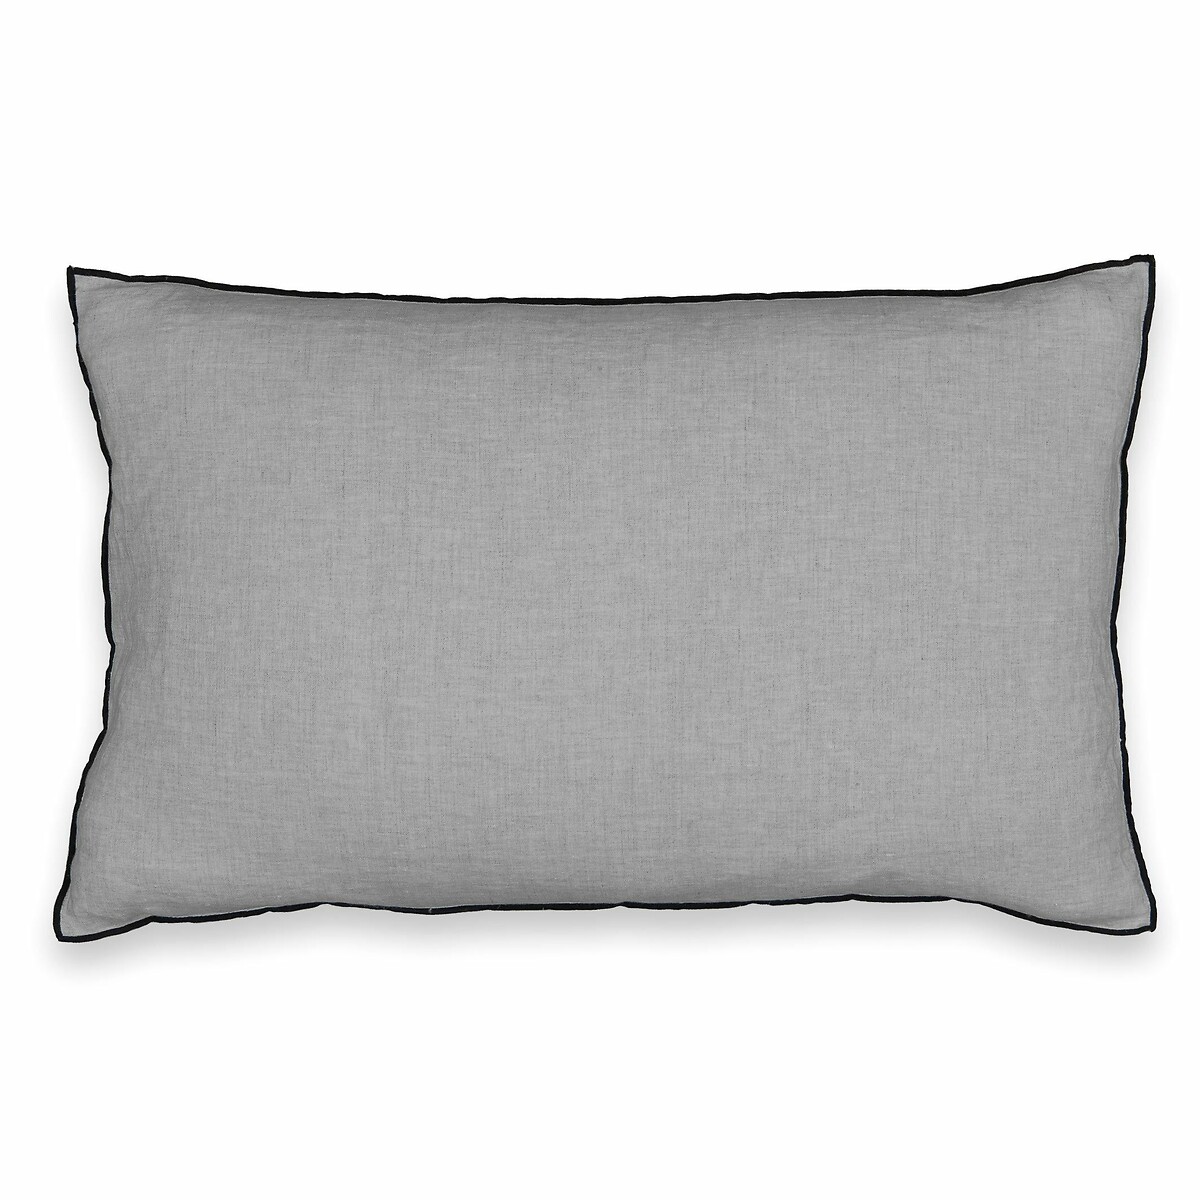 Чехол LaRedoute На подушку 100 стираный лен ELina 50 x 50 см серый, размер 50 x 50 см - фото 3